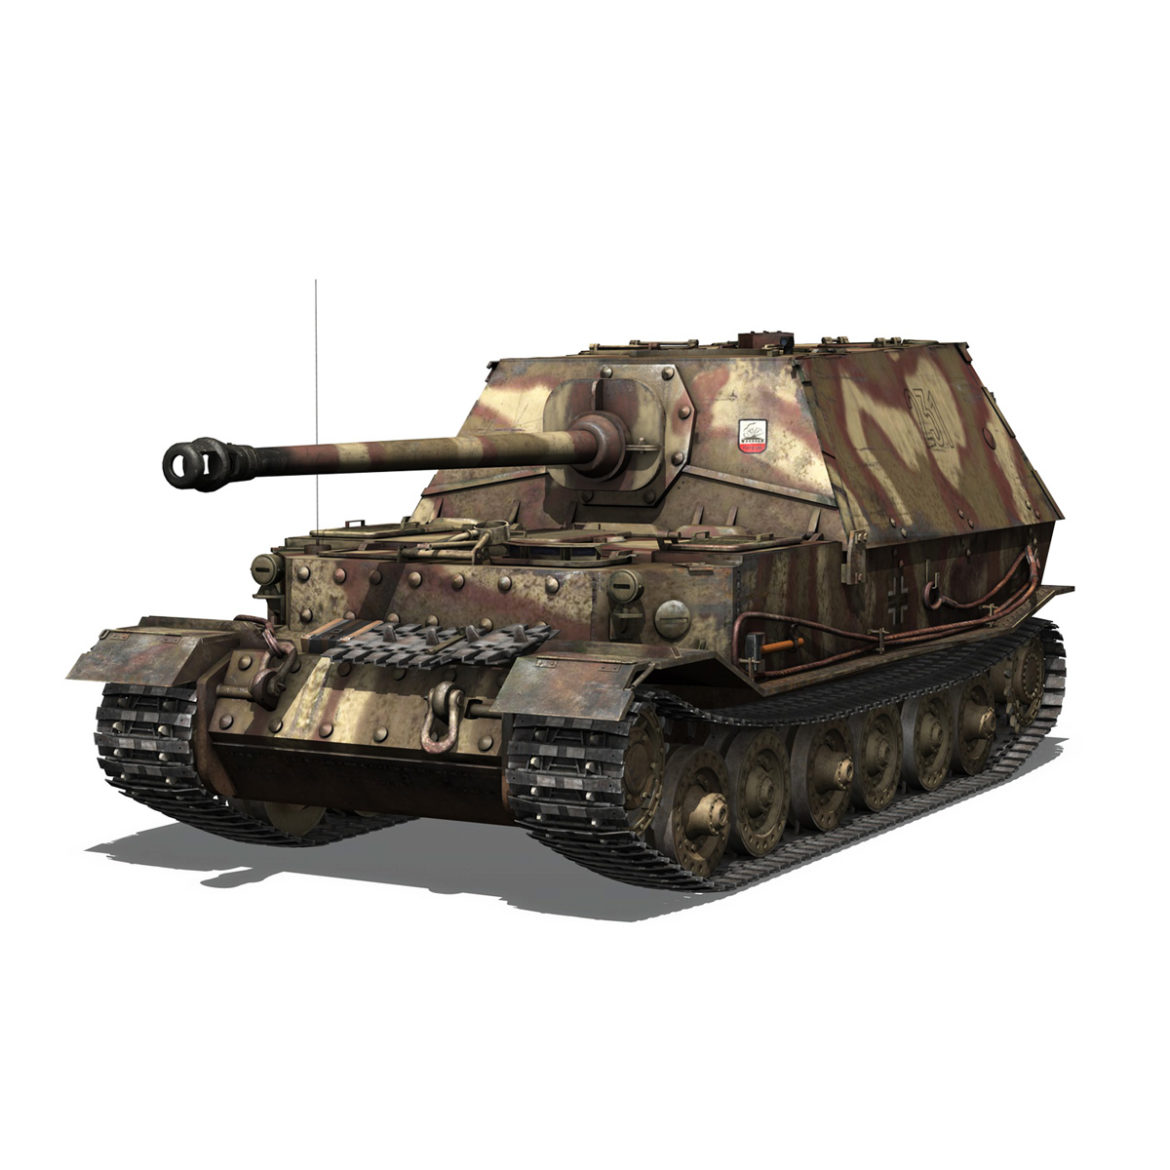 ferdinand tank destroyer – tiger (p) – 231 3d model 3ds fbx c4d lwo obj 295018